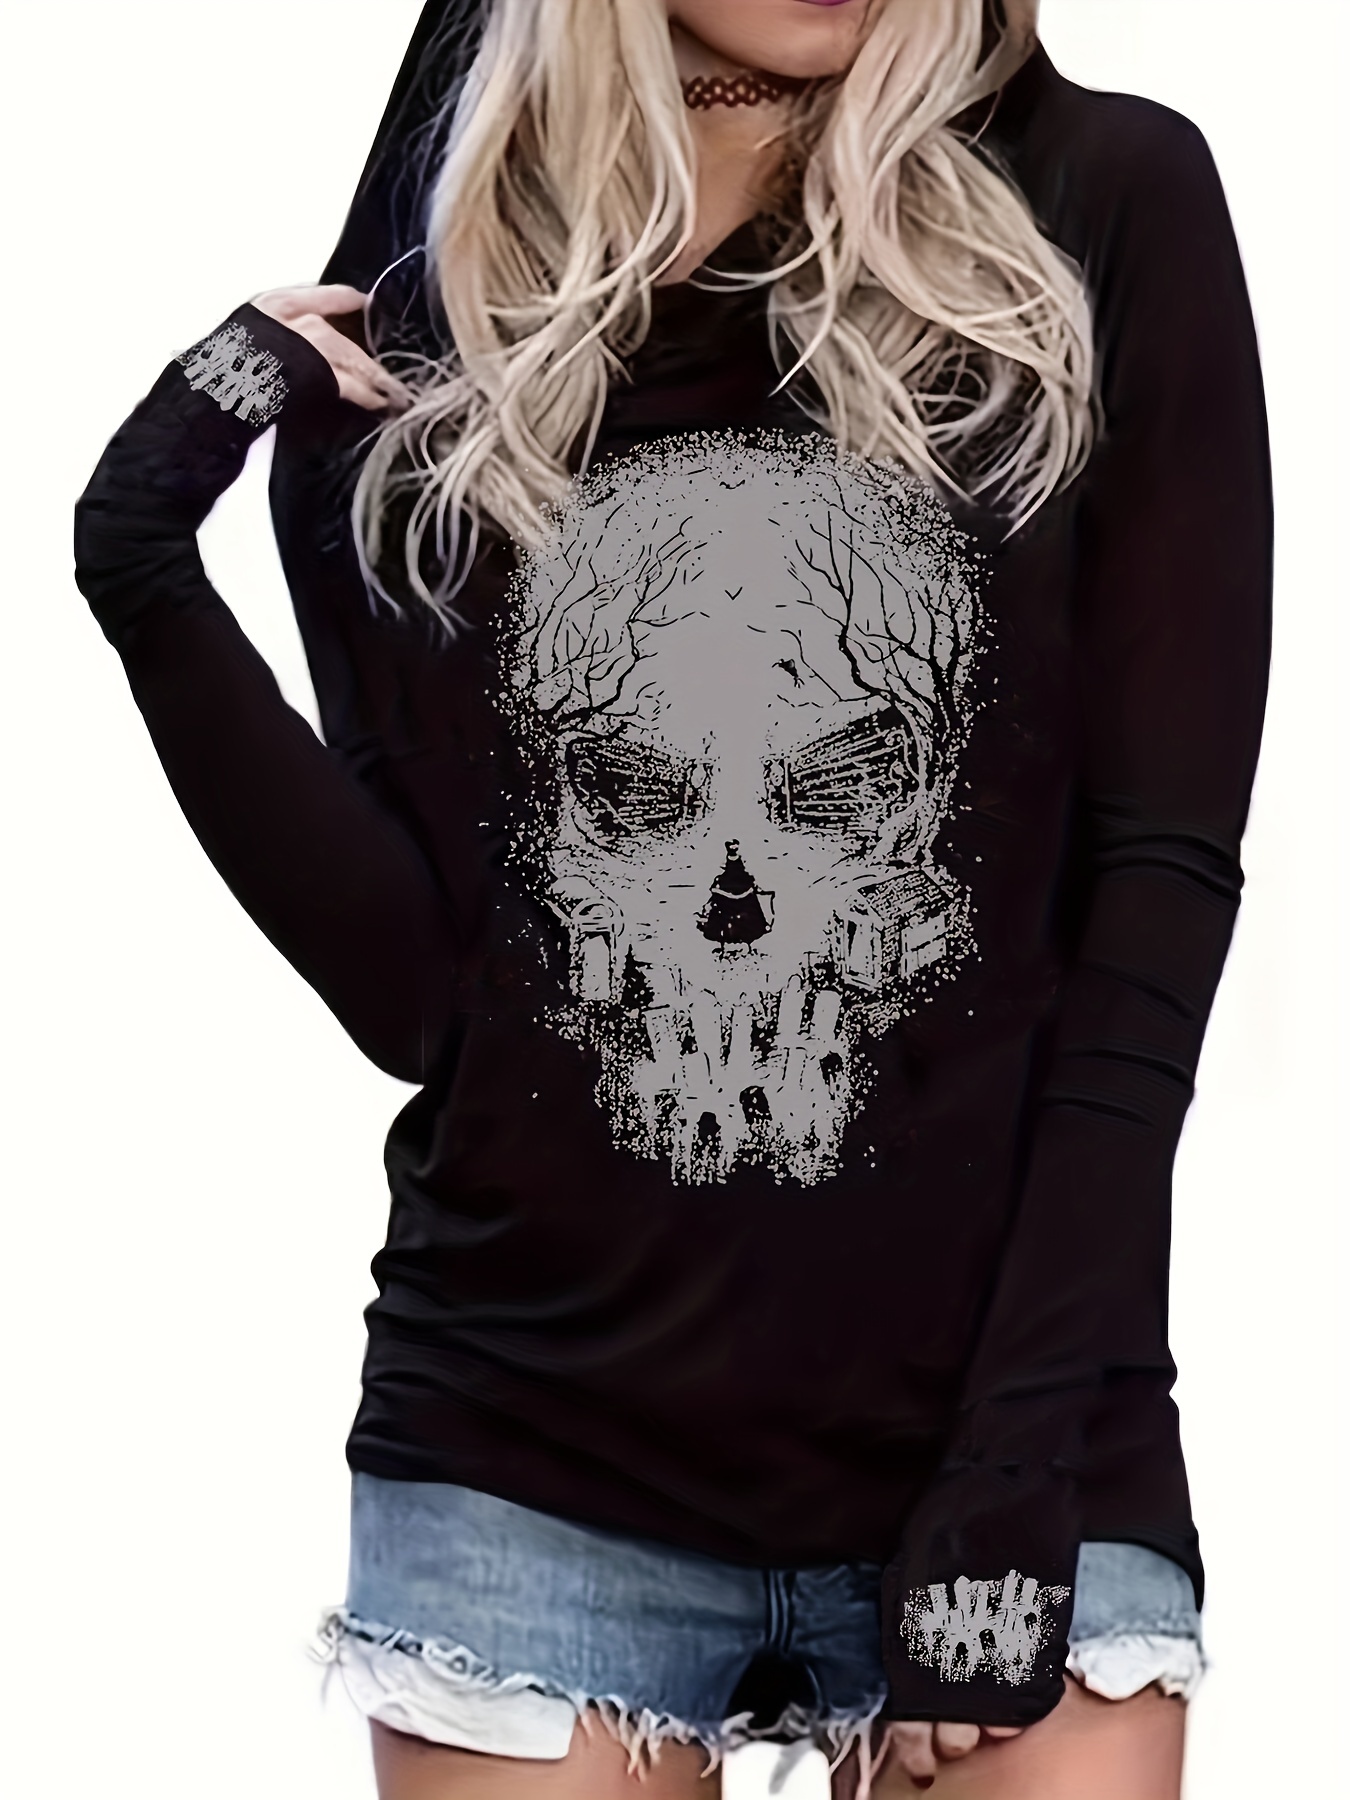 Women's Skull Cut Out T Shirt / Goth Ripped Skull Top 